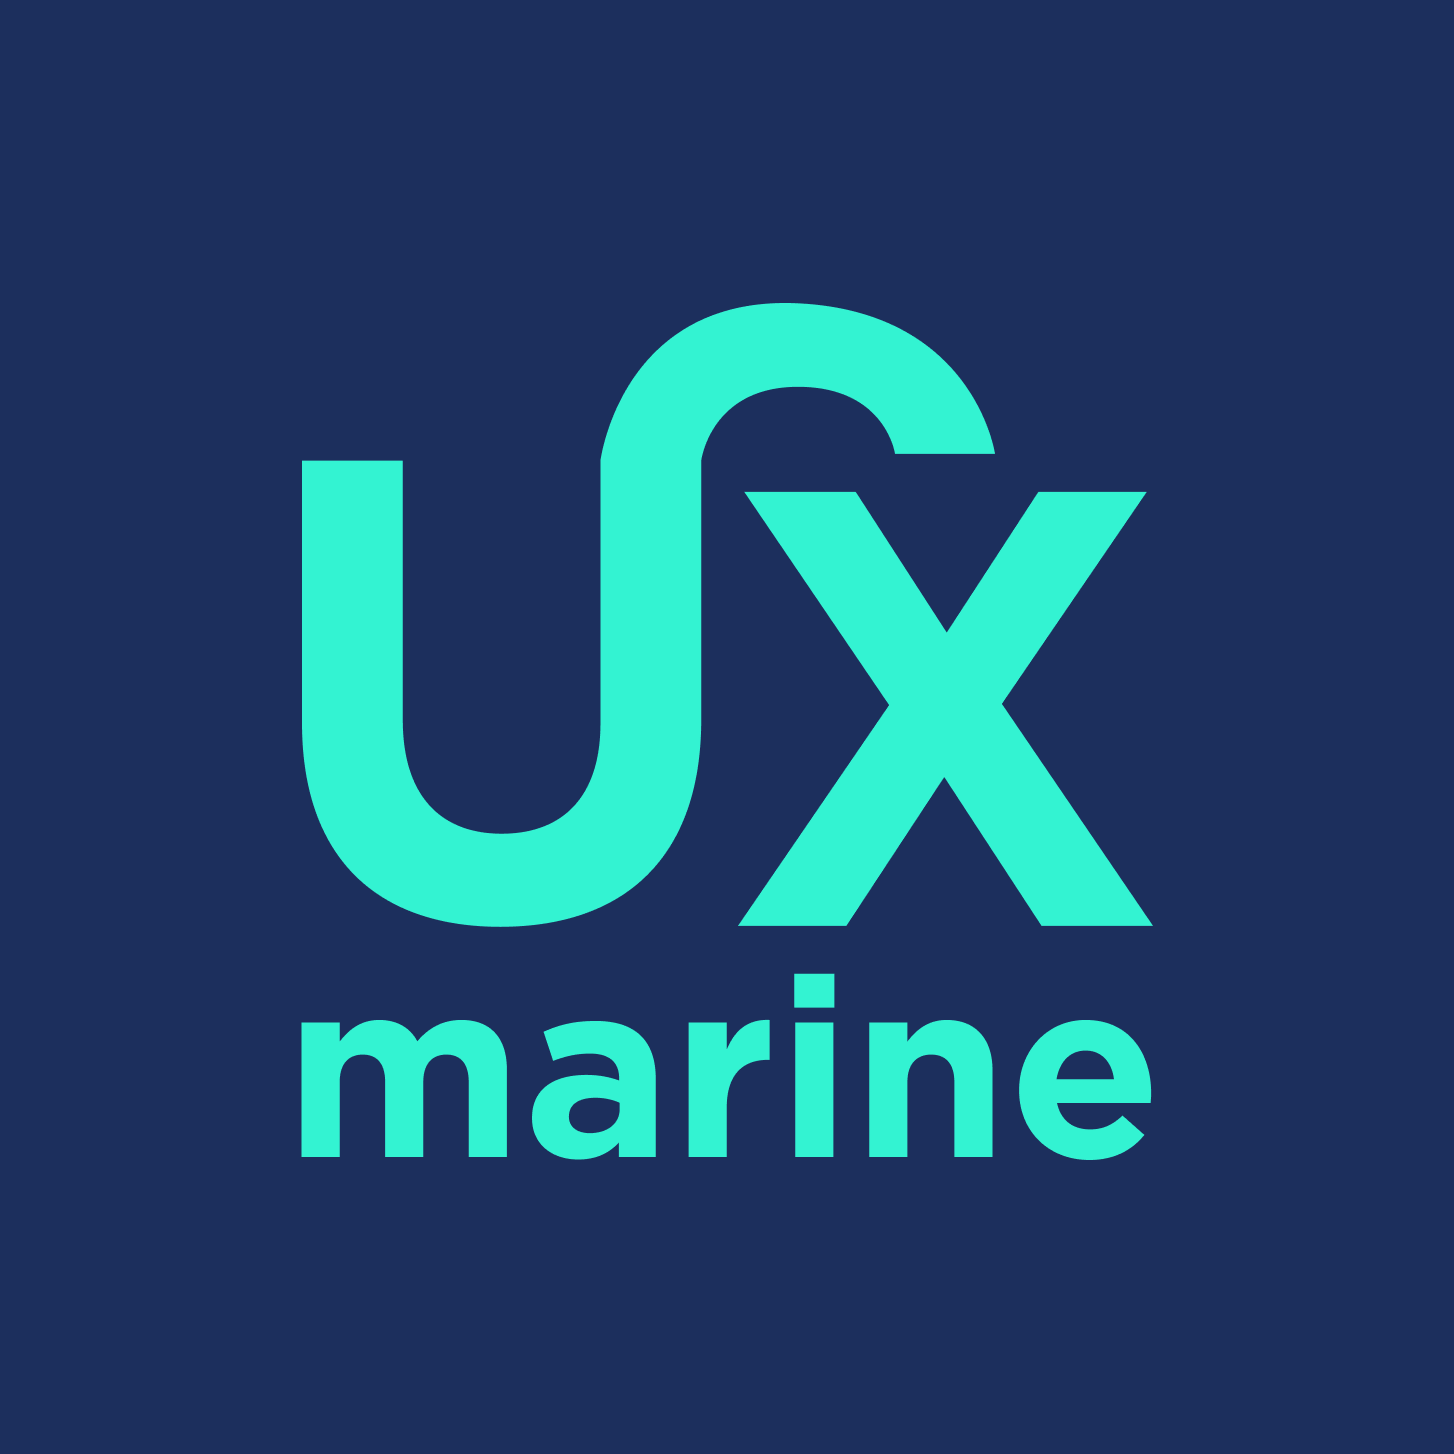 UX_marine_logo_green_on_blue_square